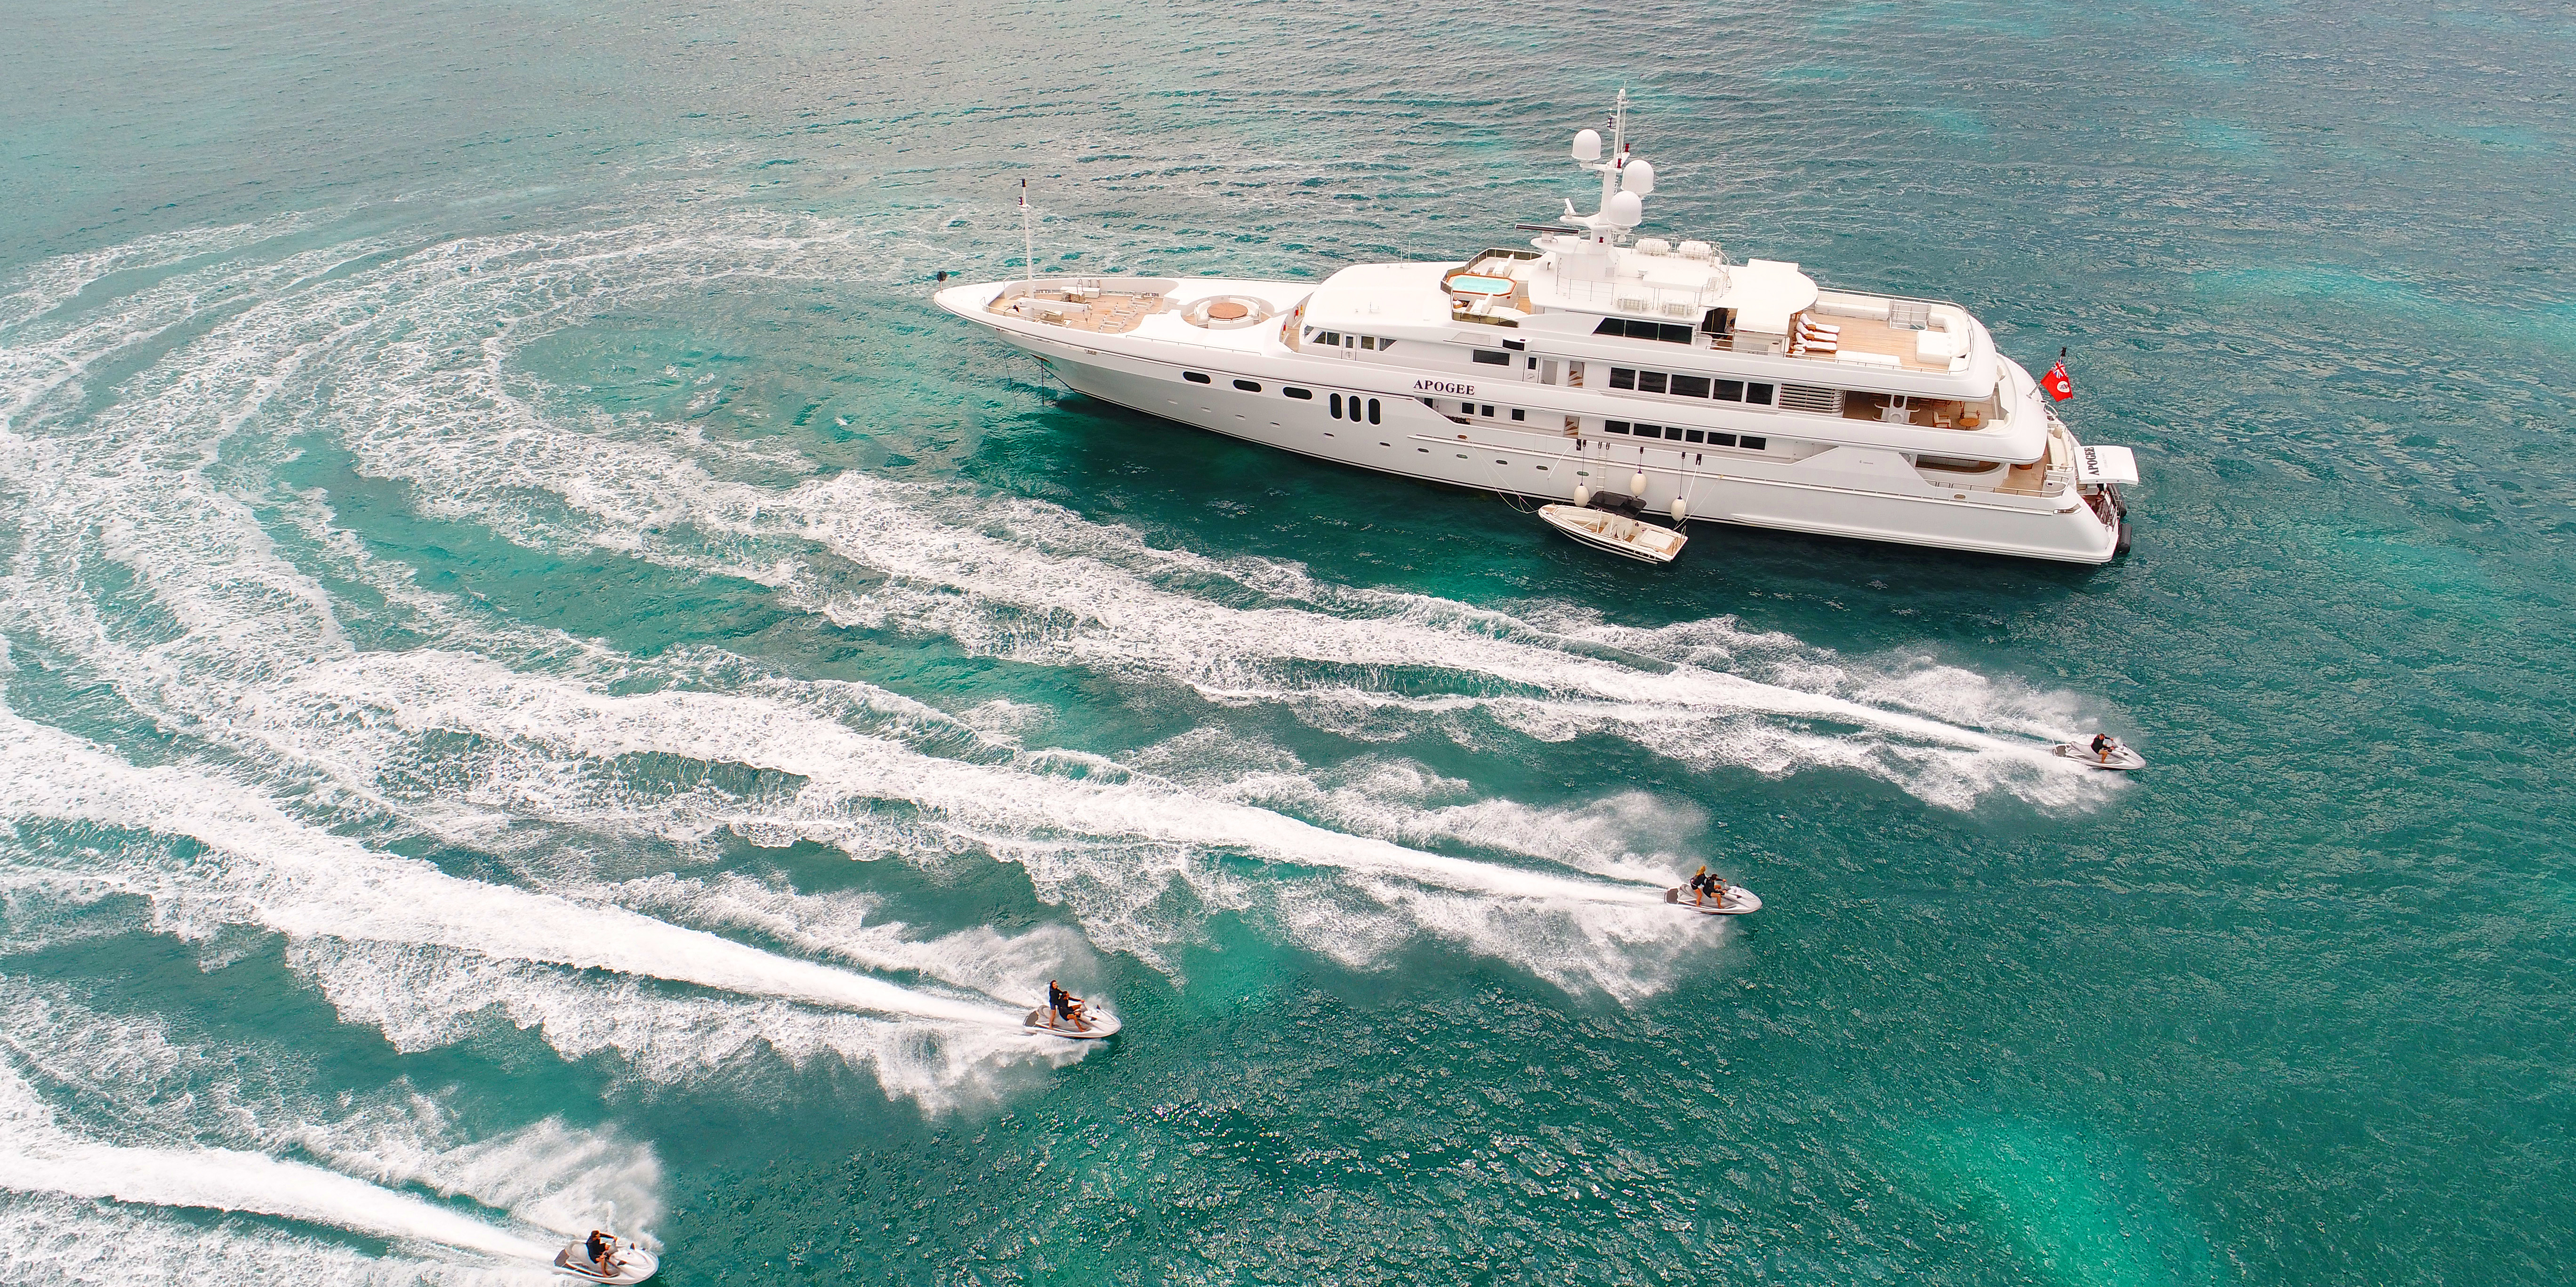 Yacht APOGEE - Water Toy Fun In The Caribbean